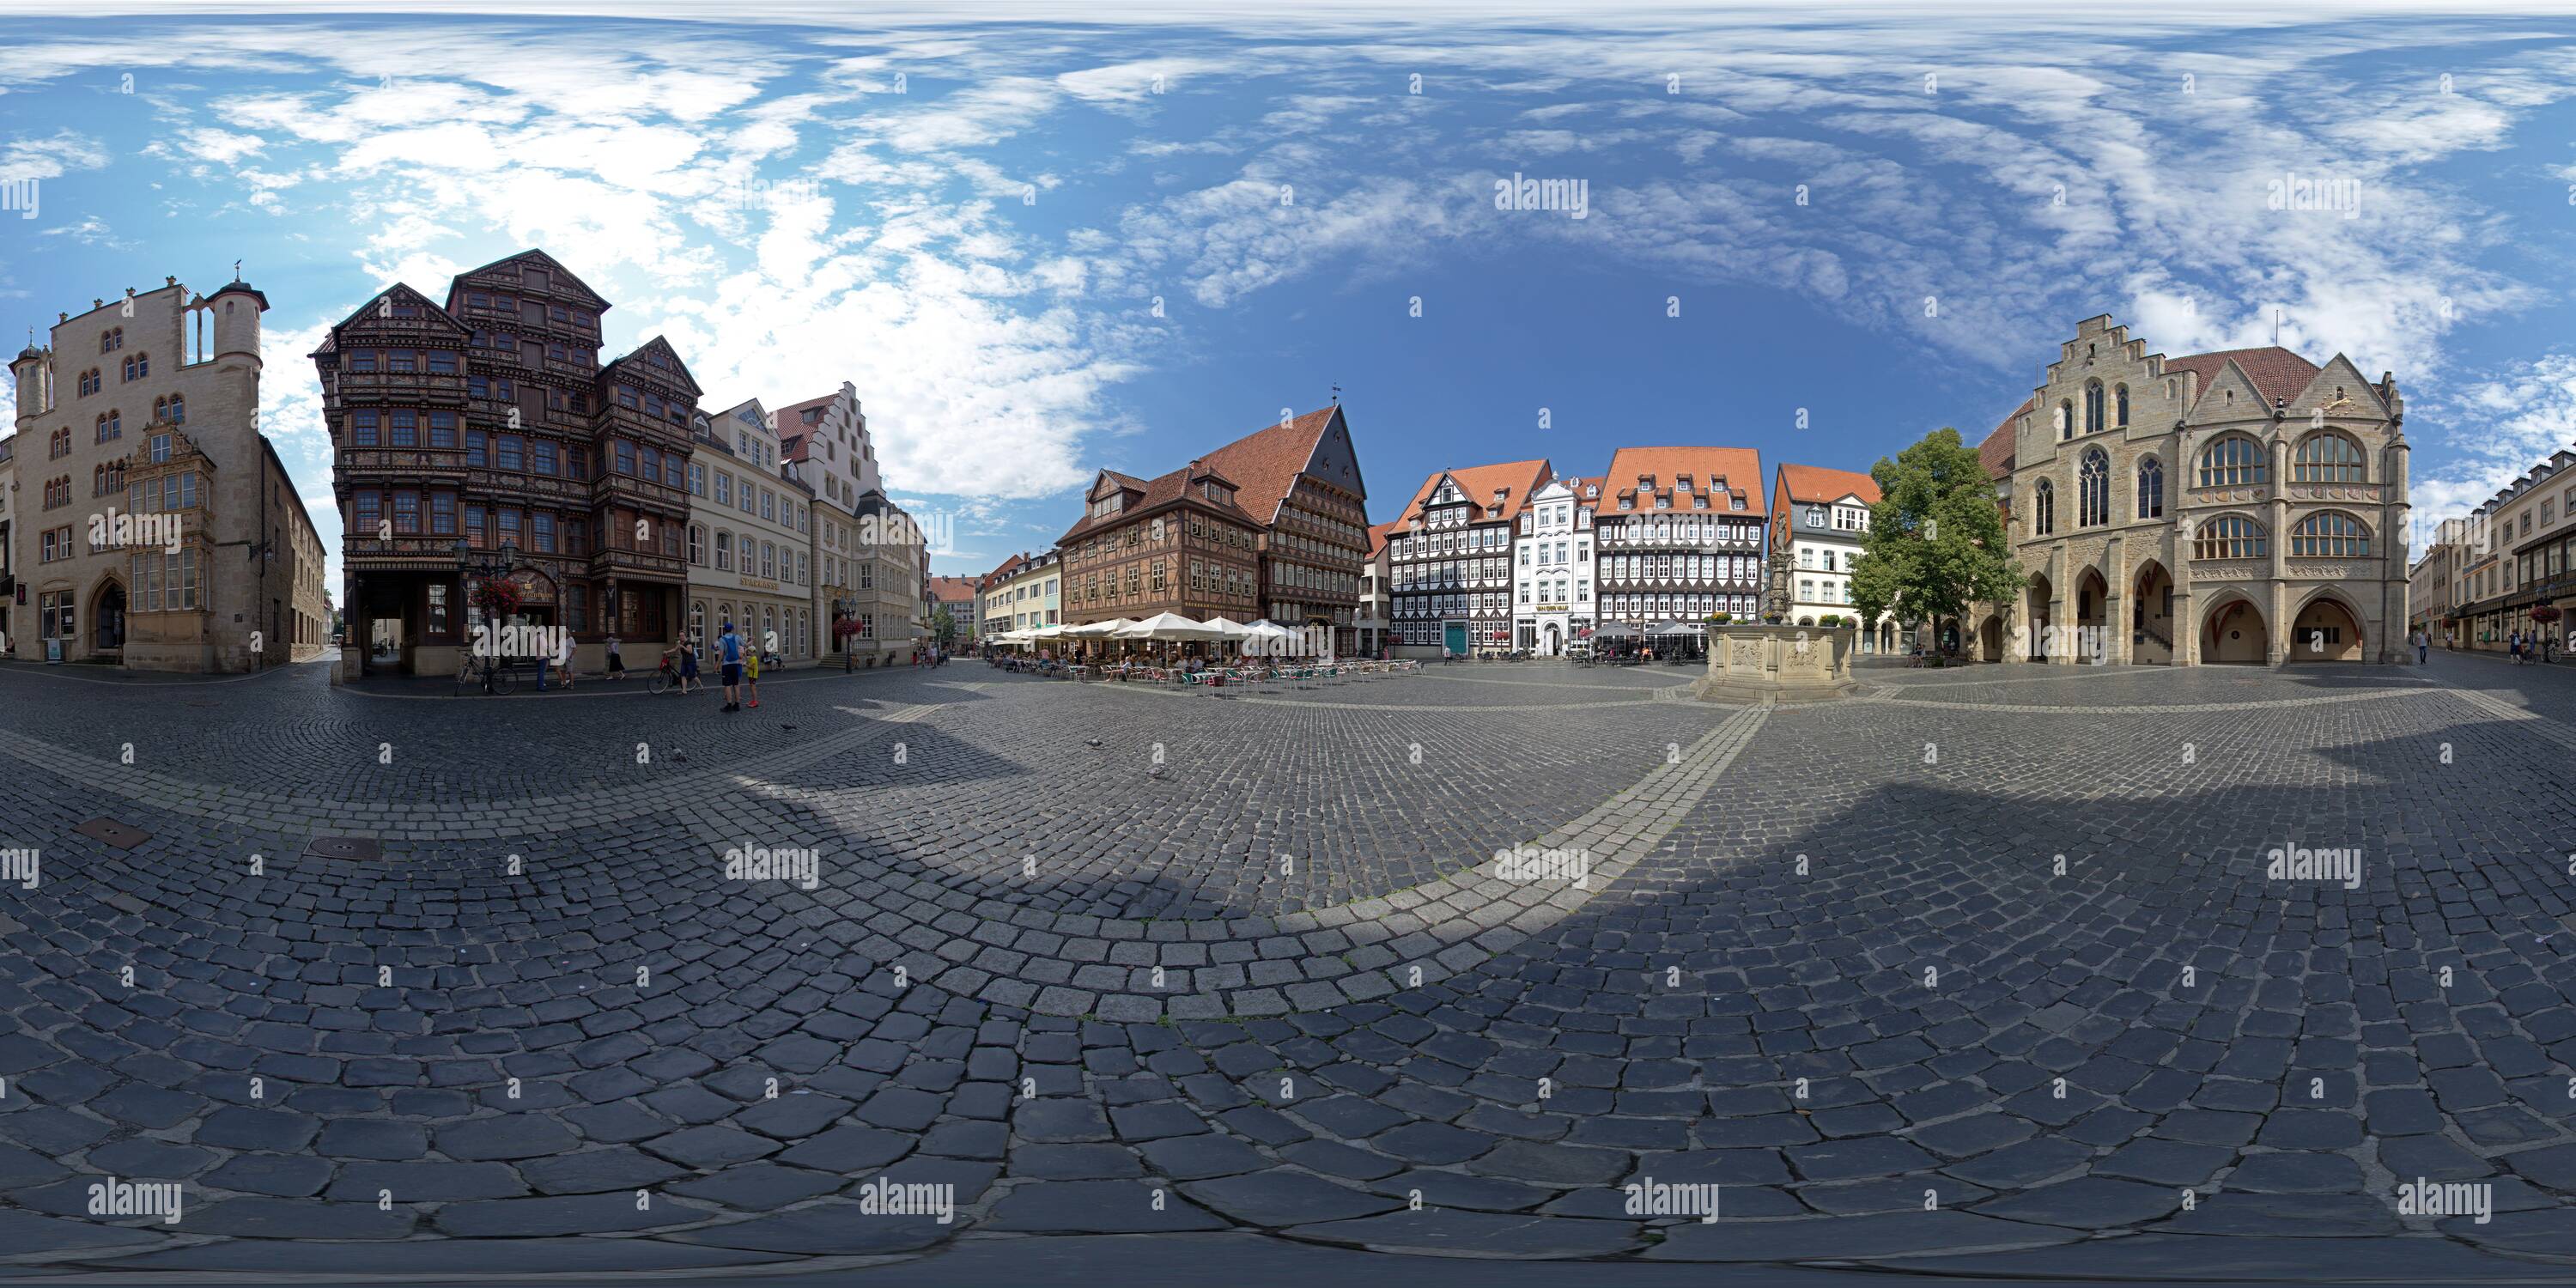 360 degree panoramic view of historic market square, Hildesheim, Lower Saxony, Germany